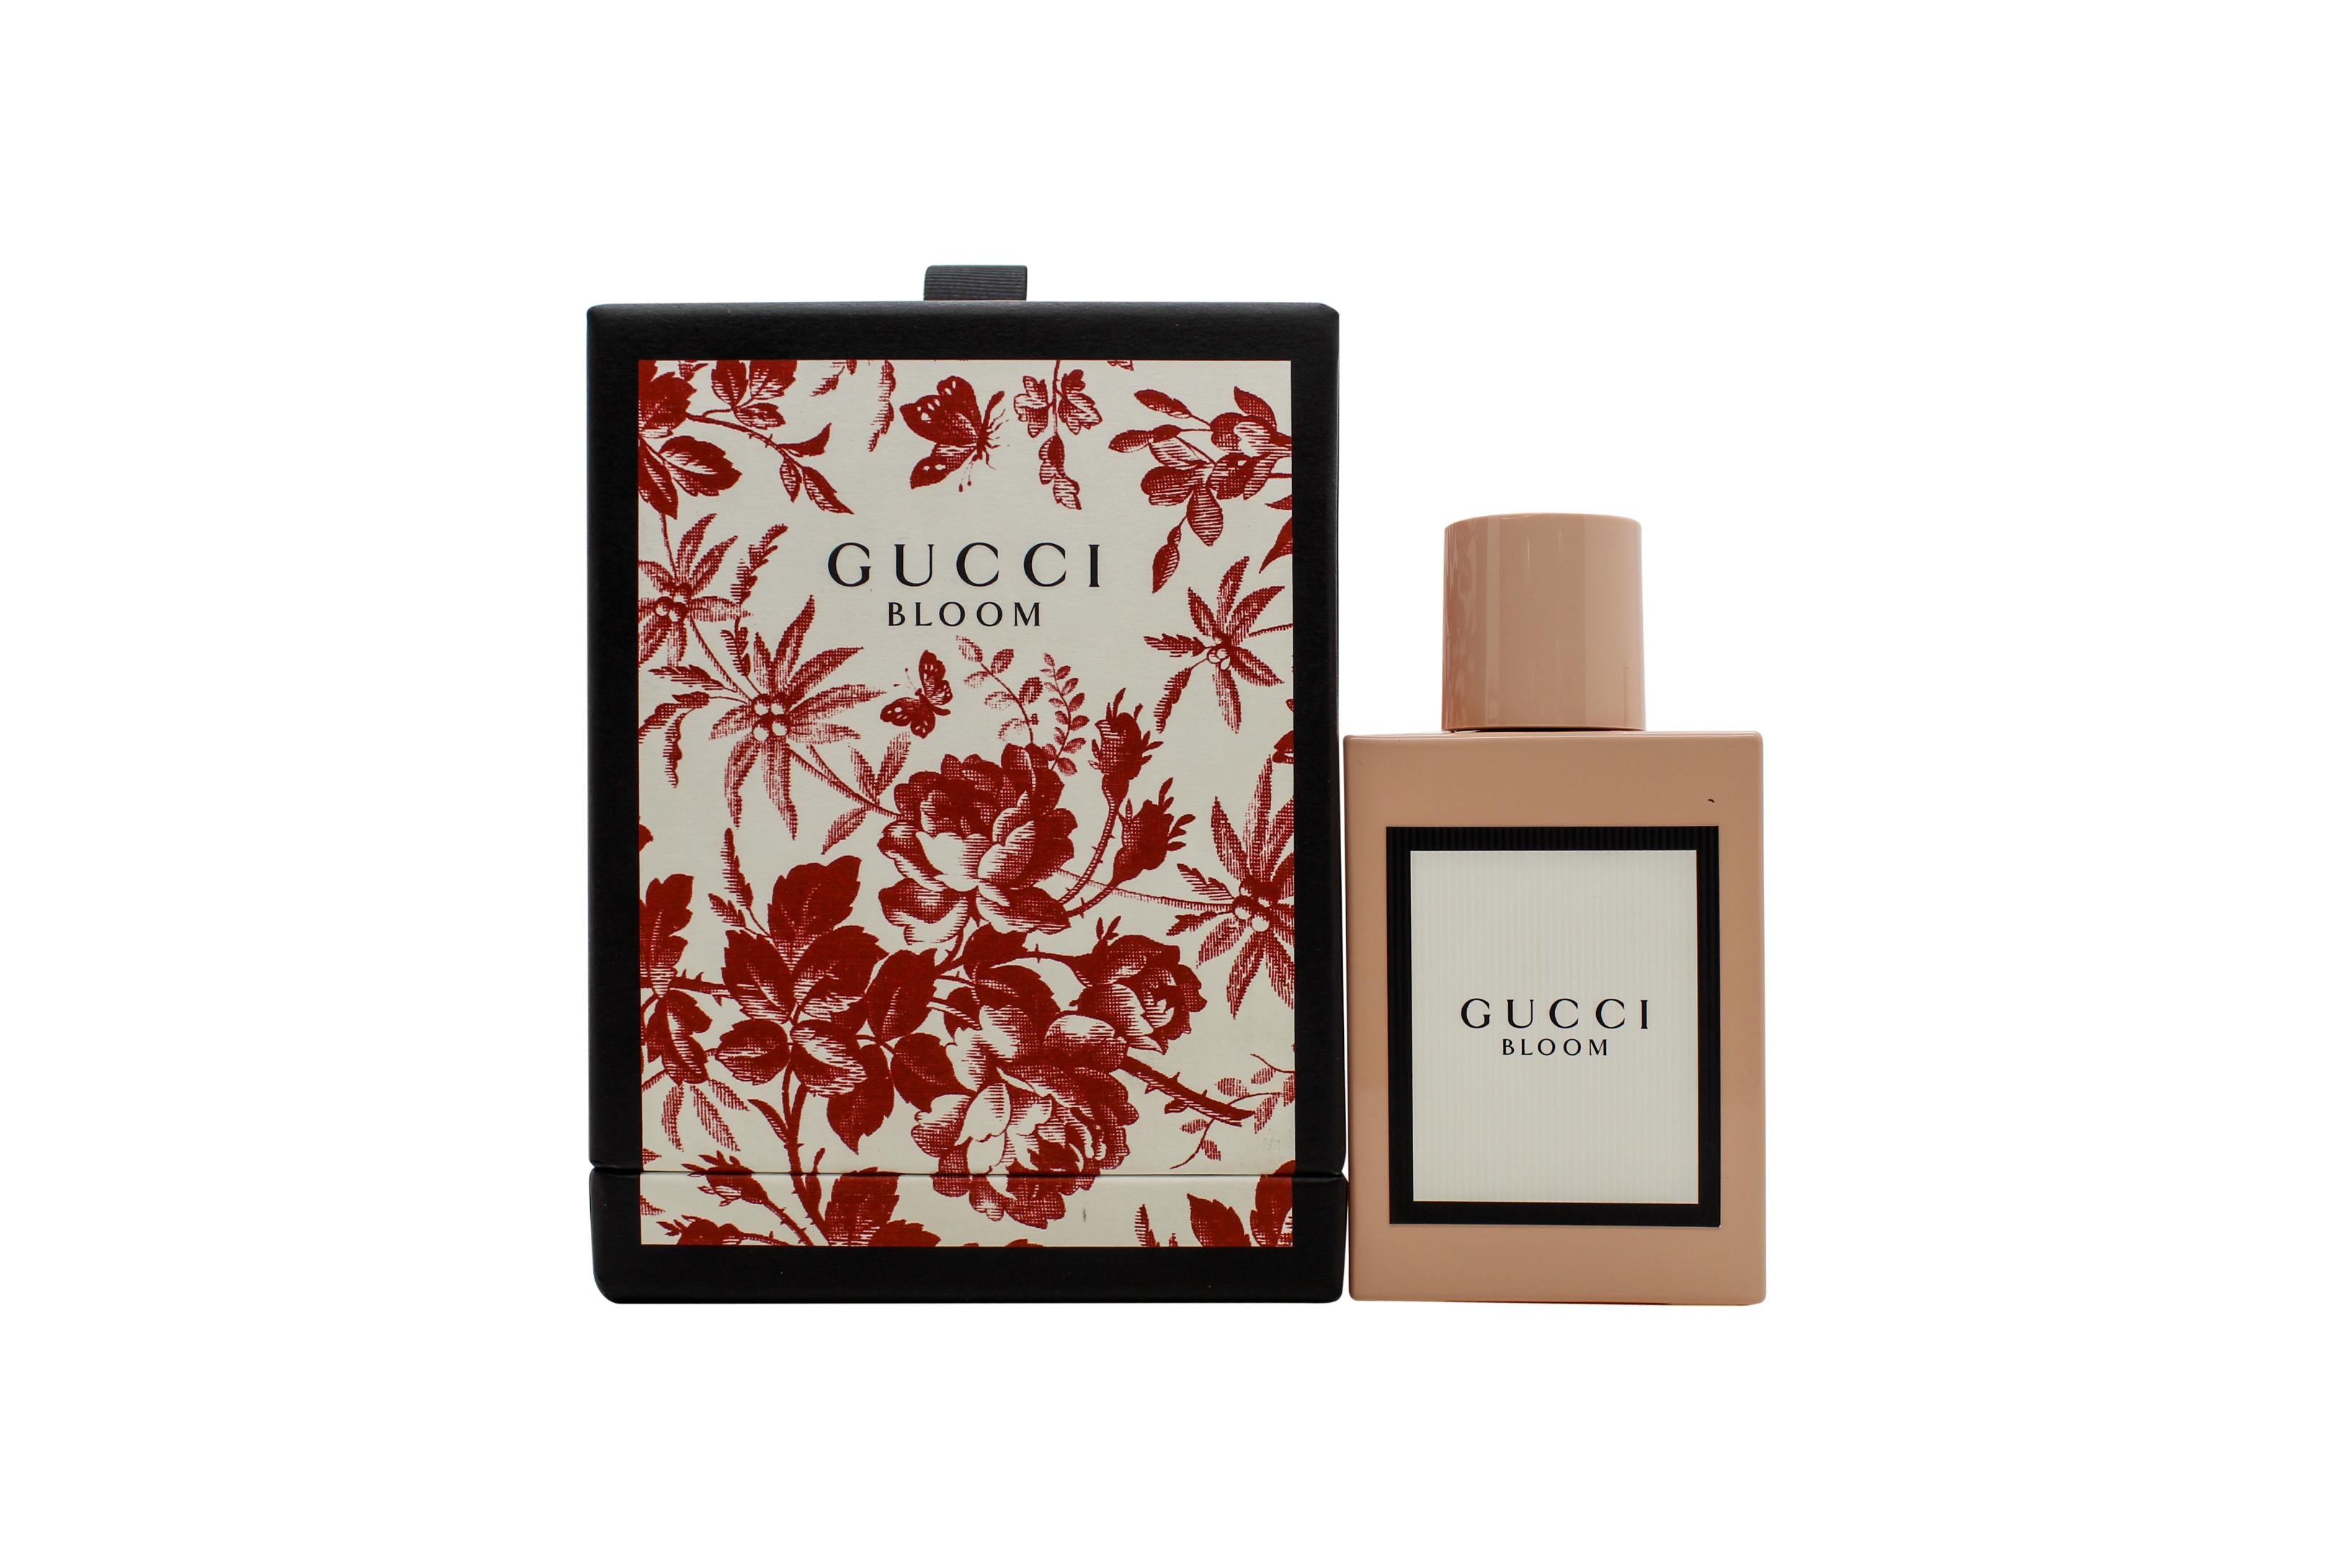 View Gucci Bloom Eau de Parfum 50ml Spray information